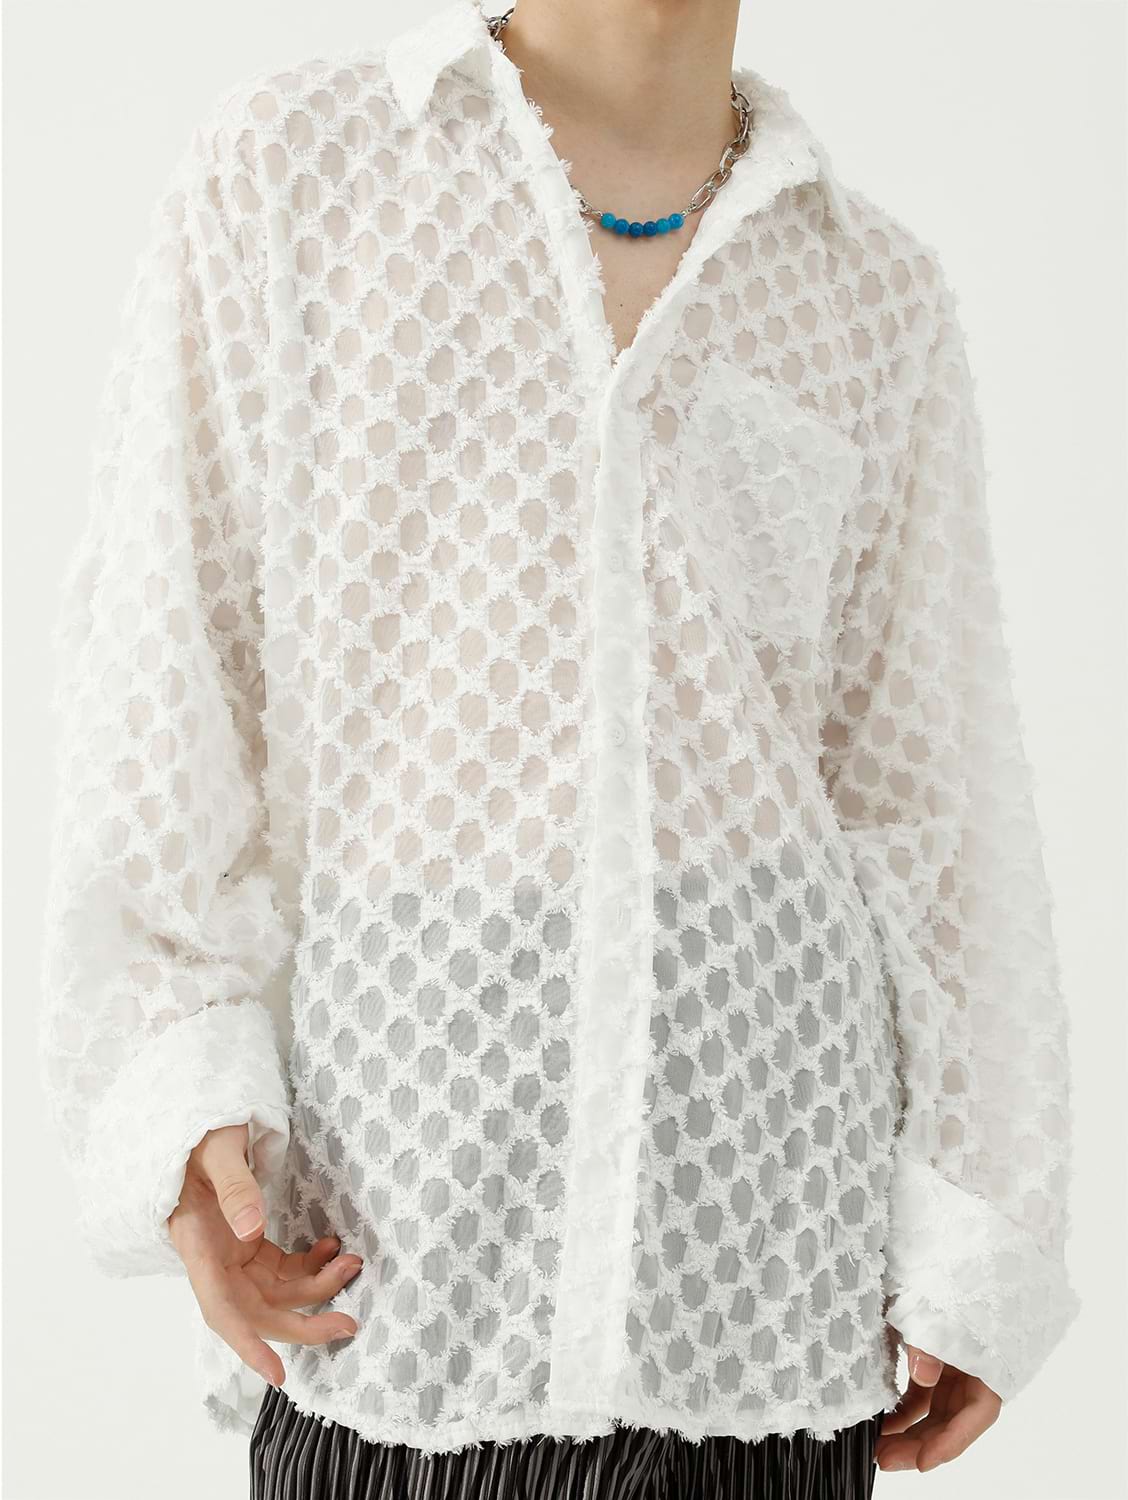 Checker Sheer Translucent Shirt - nightcity clothing